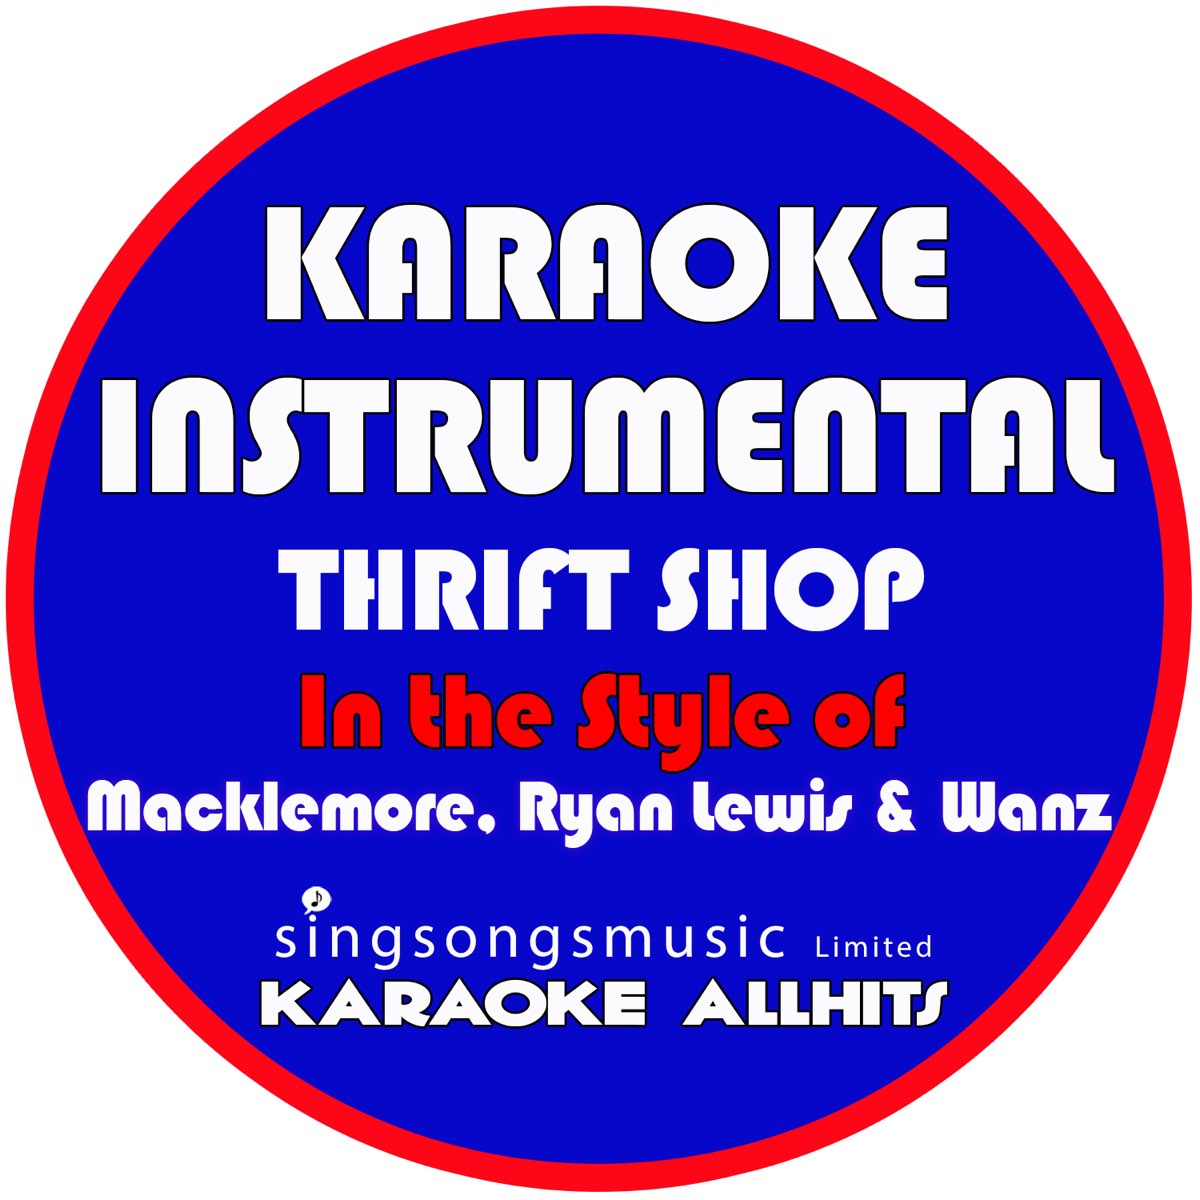 Shops thrift macklemore ryan. Thrift shop — Macklemore & Ryan Lewis featuring WANZ Sax Note. Thrift shop Branding.